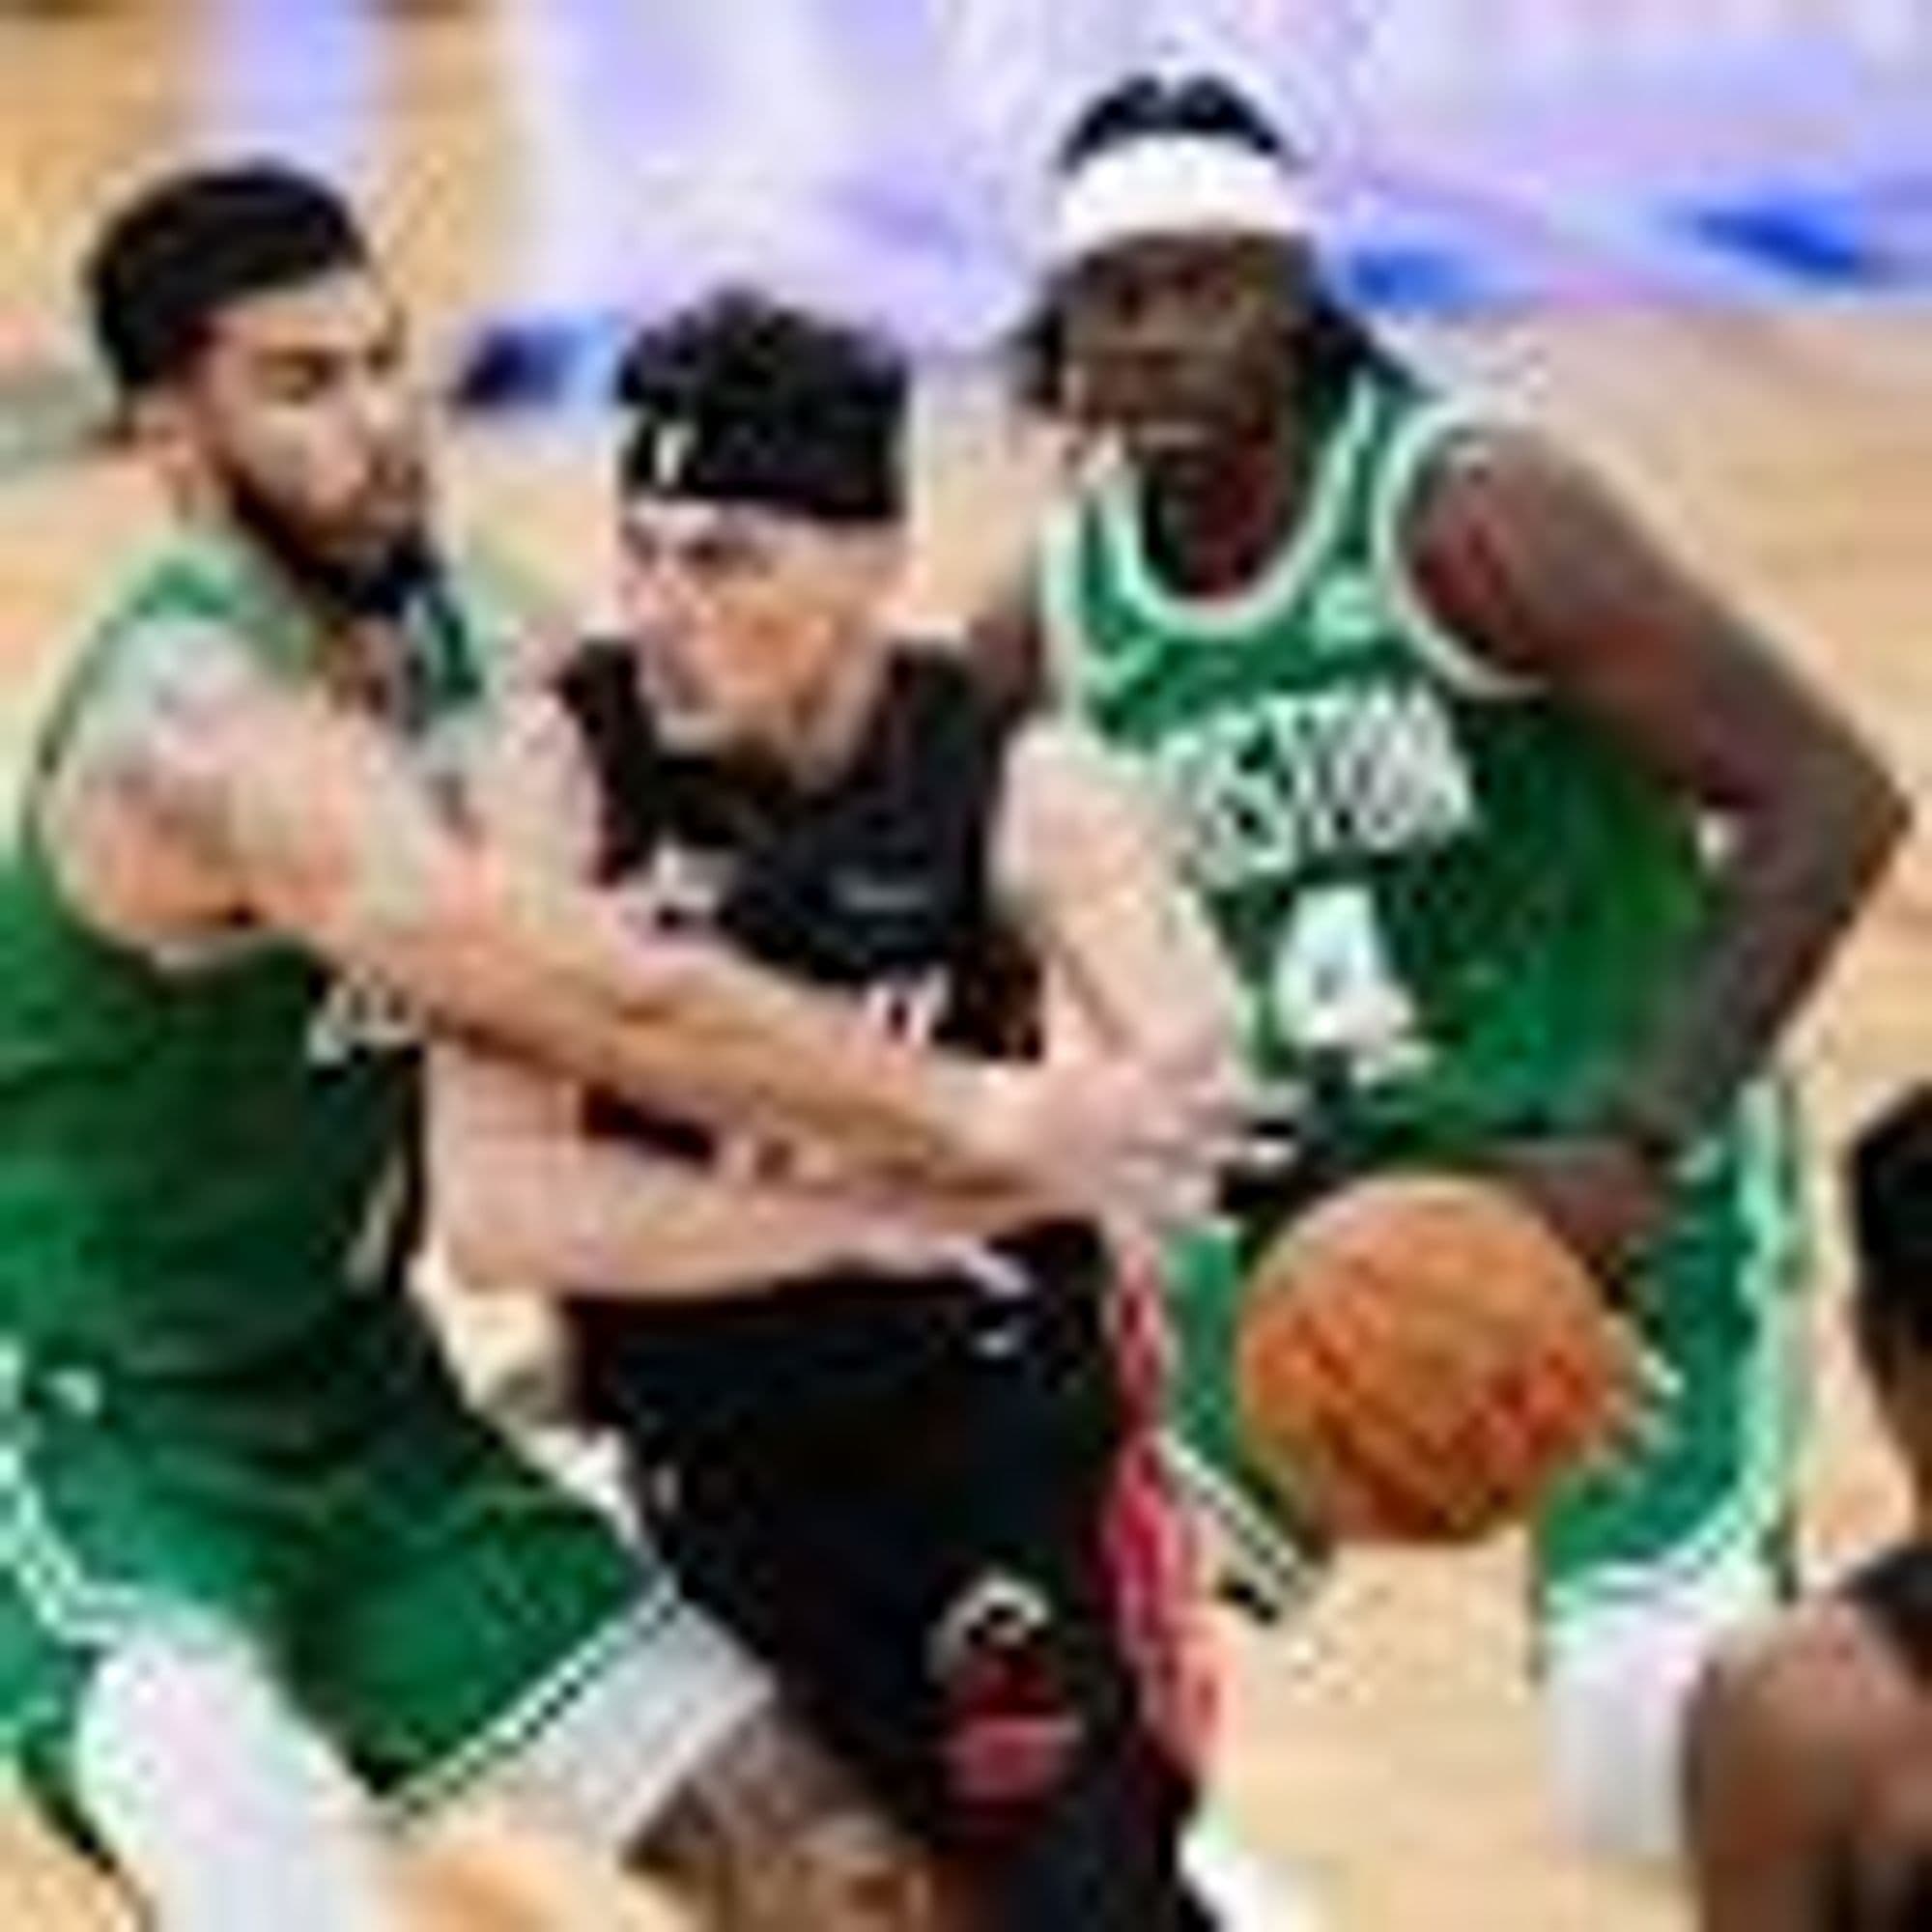 # Title: Miami Heat's Three-Point Barrage Levels Series Against Boston Celtics, Thunder Dominates Pelicans in Western Showdown